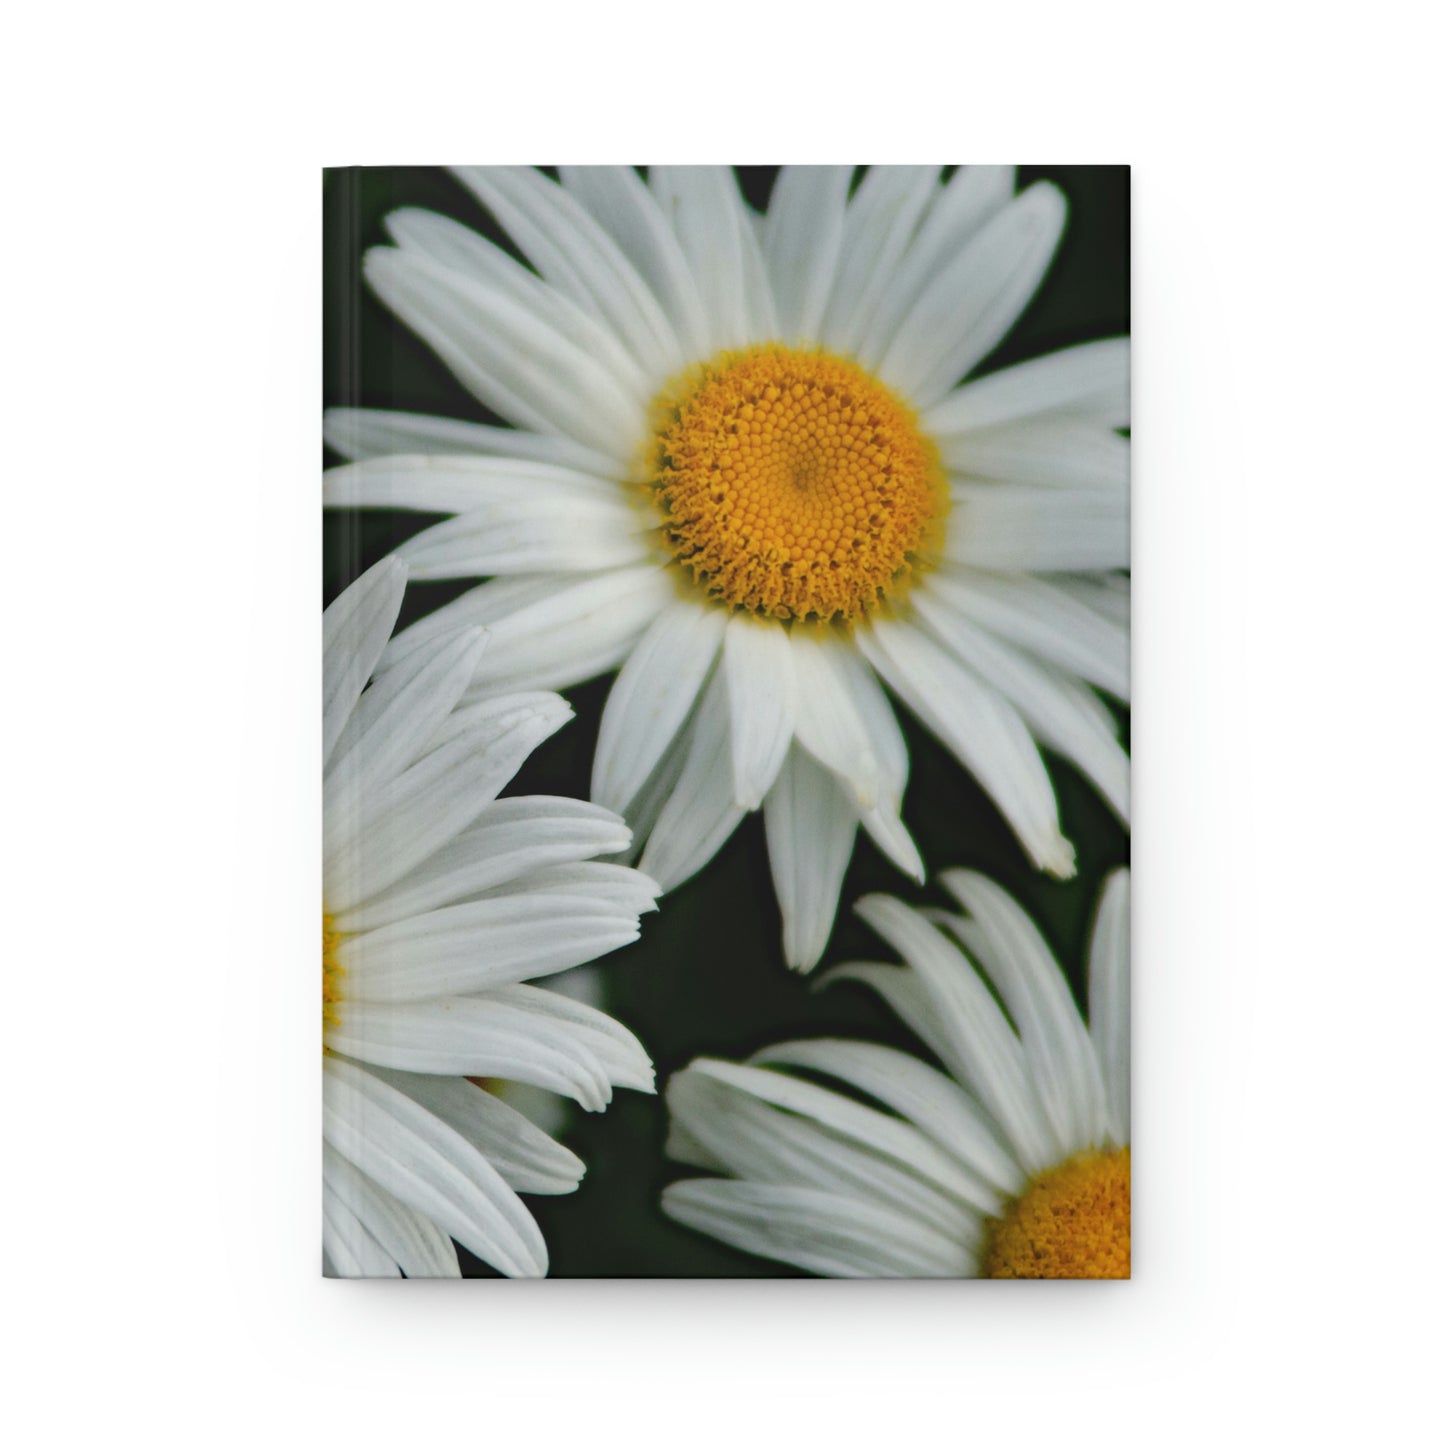 Flowers 01 Hardcover Journal Matte